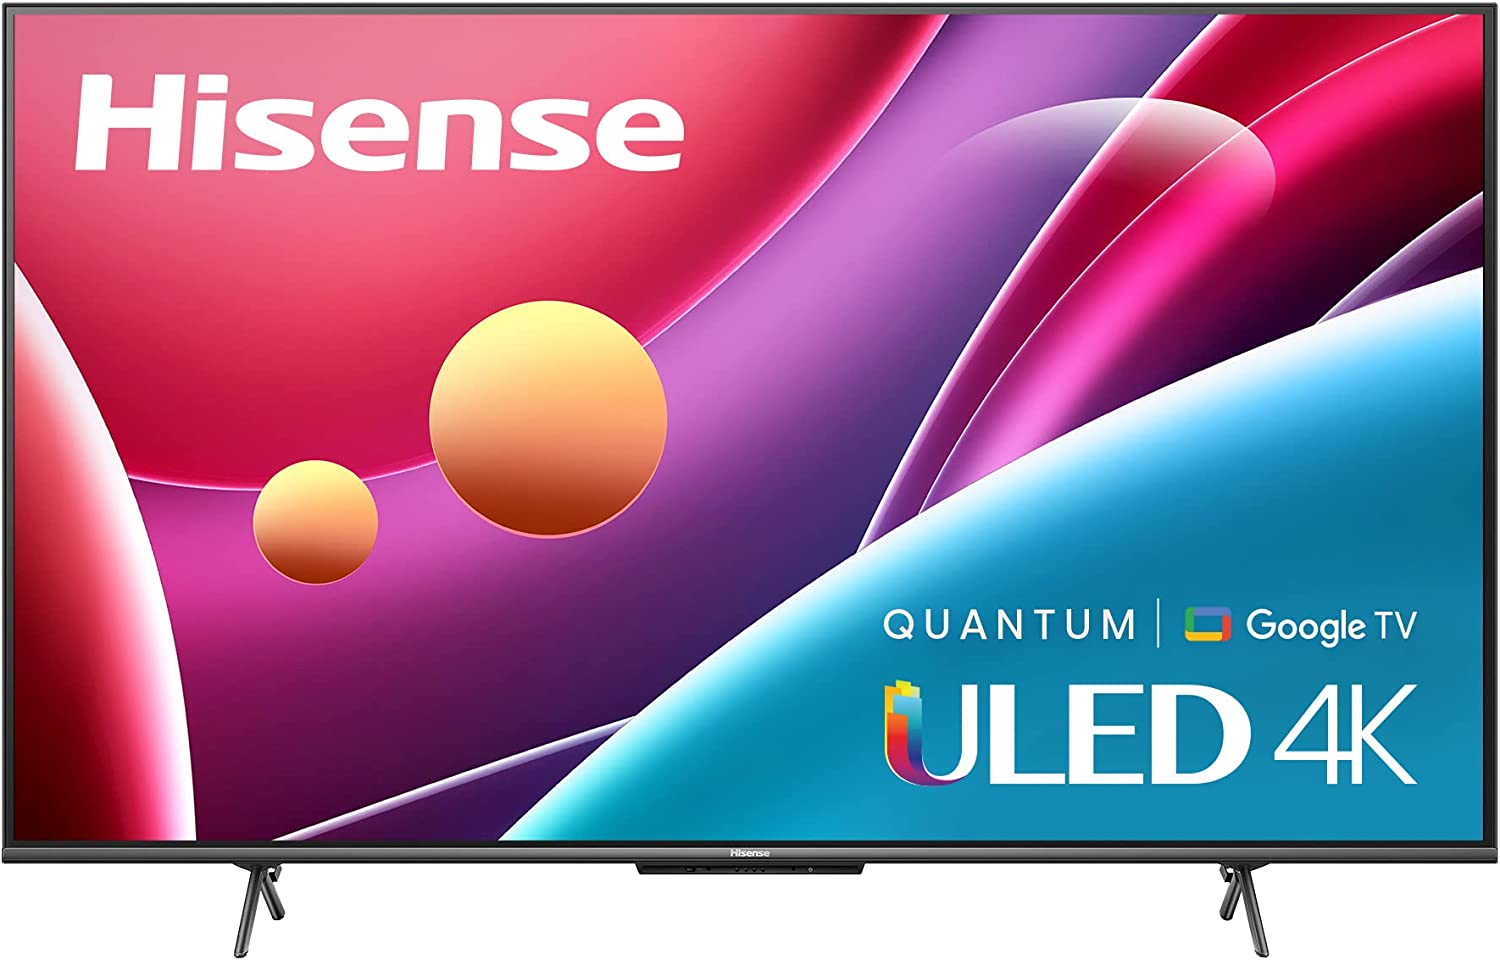 65" Hisense U6H Series Quantum ULED 4K UHD Smart Google TV $550 + Free Shipping